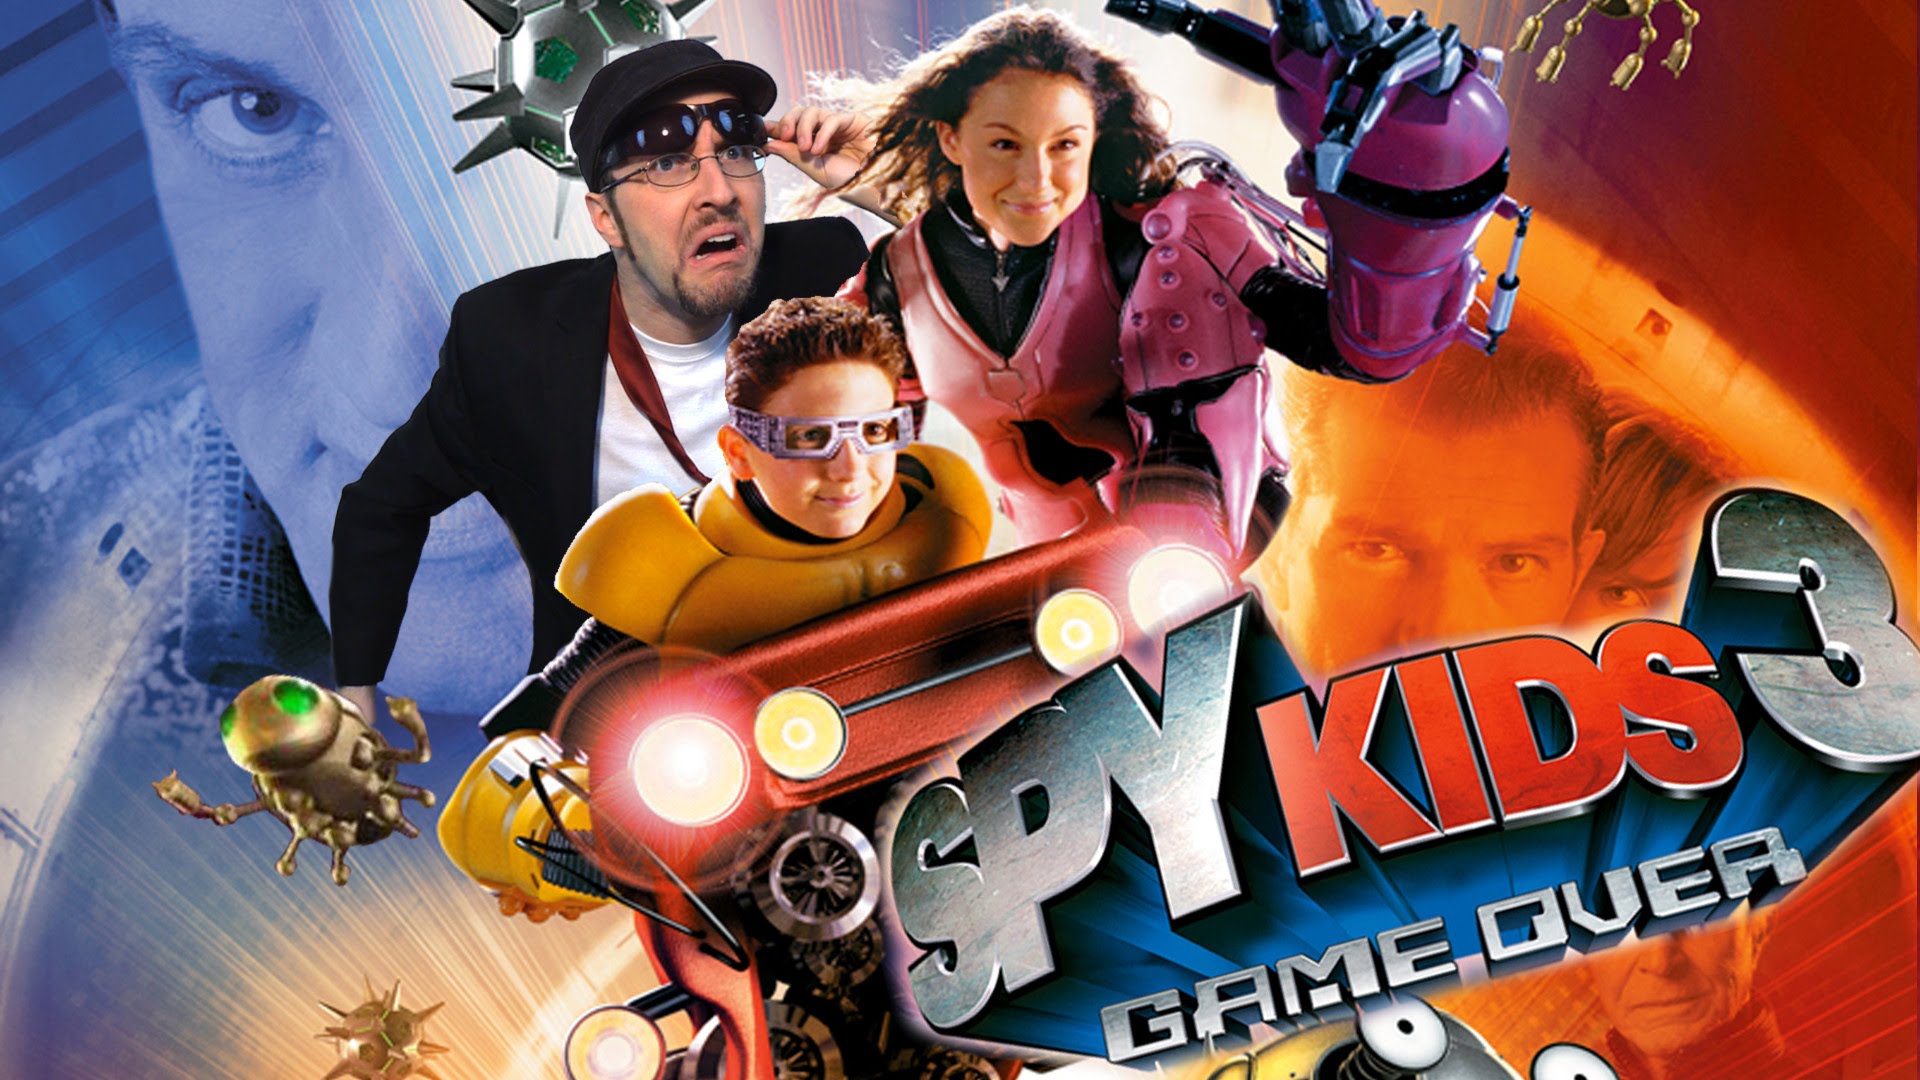 Spy Kids 3 D Game  Over  wallpapers  Movie  HQ Spy Kids 3 D 